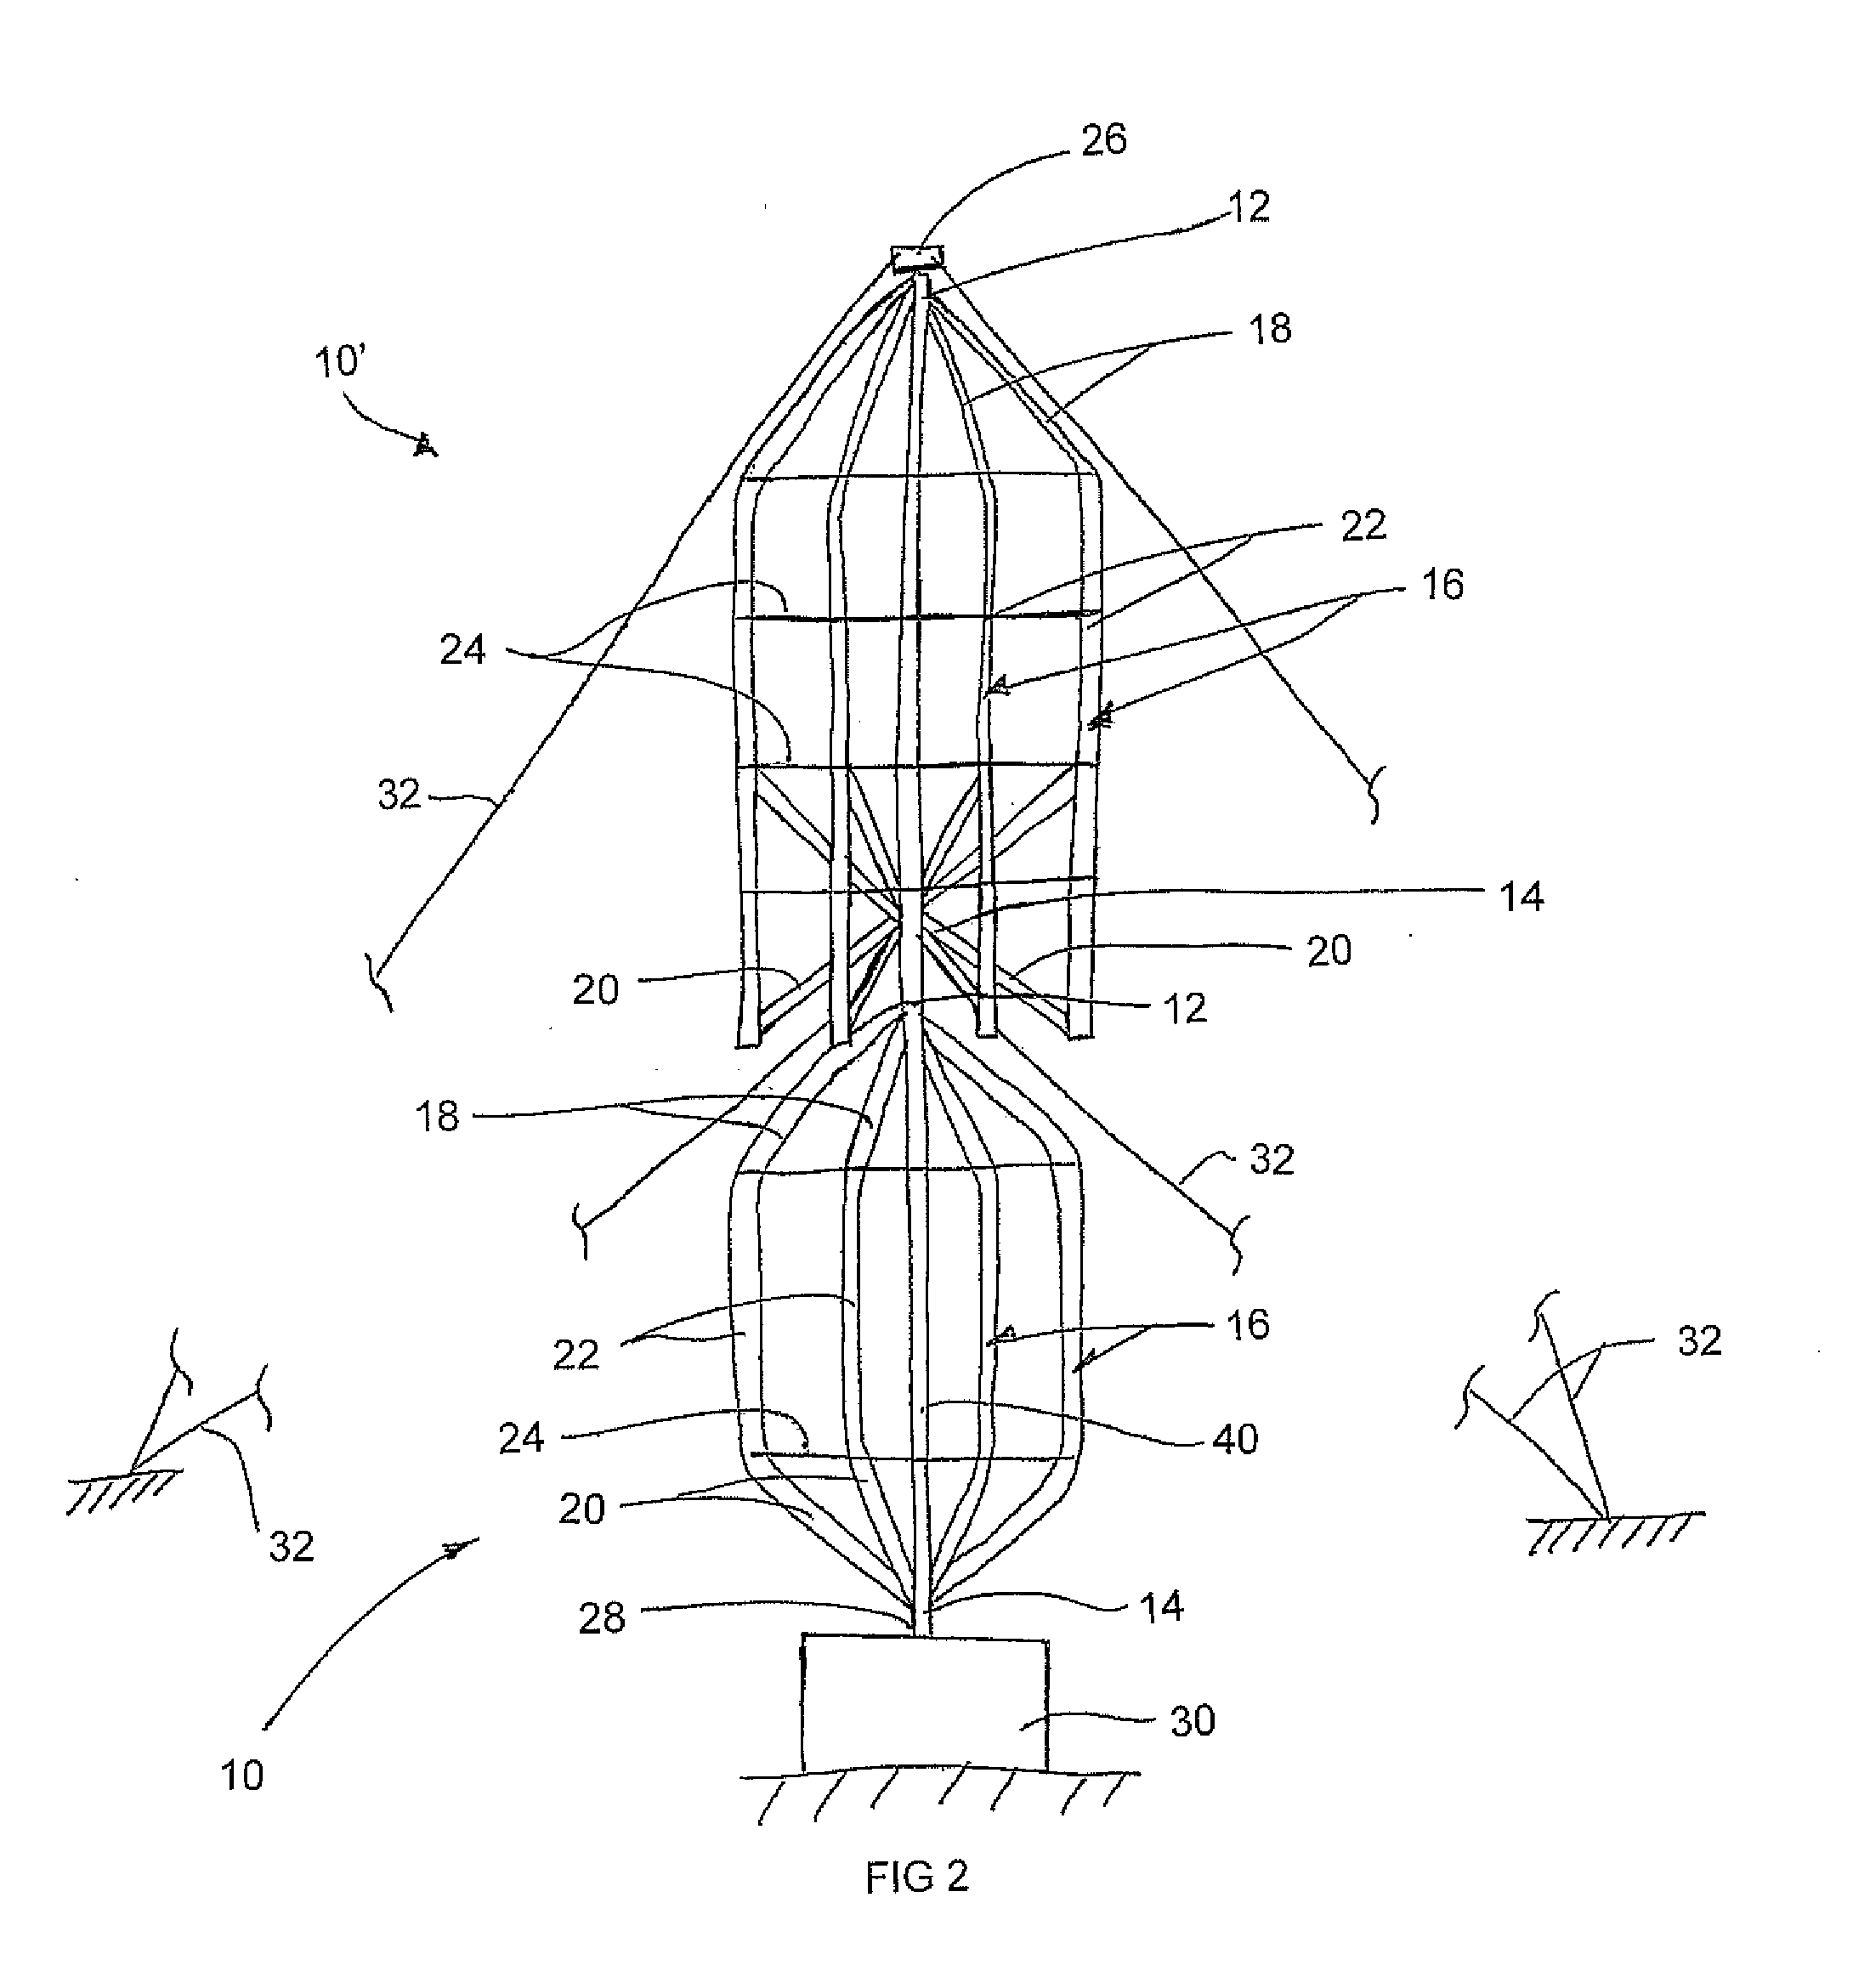 Modified Darrieus Vertical Axis Turbine